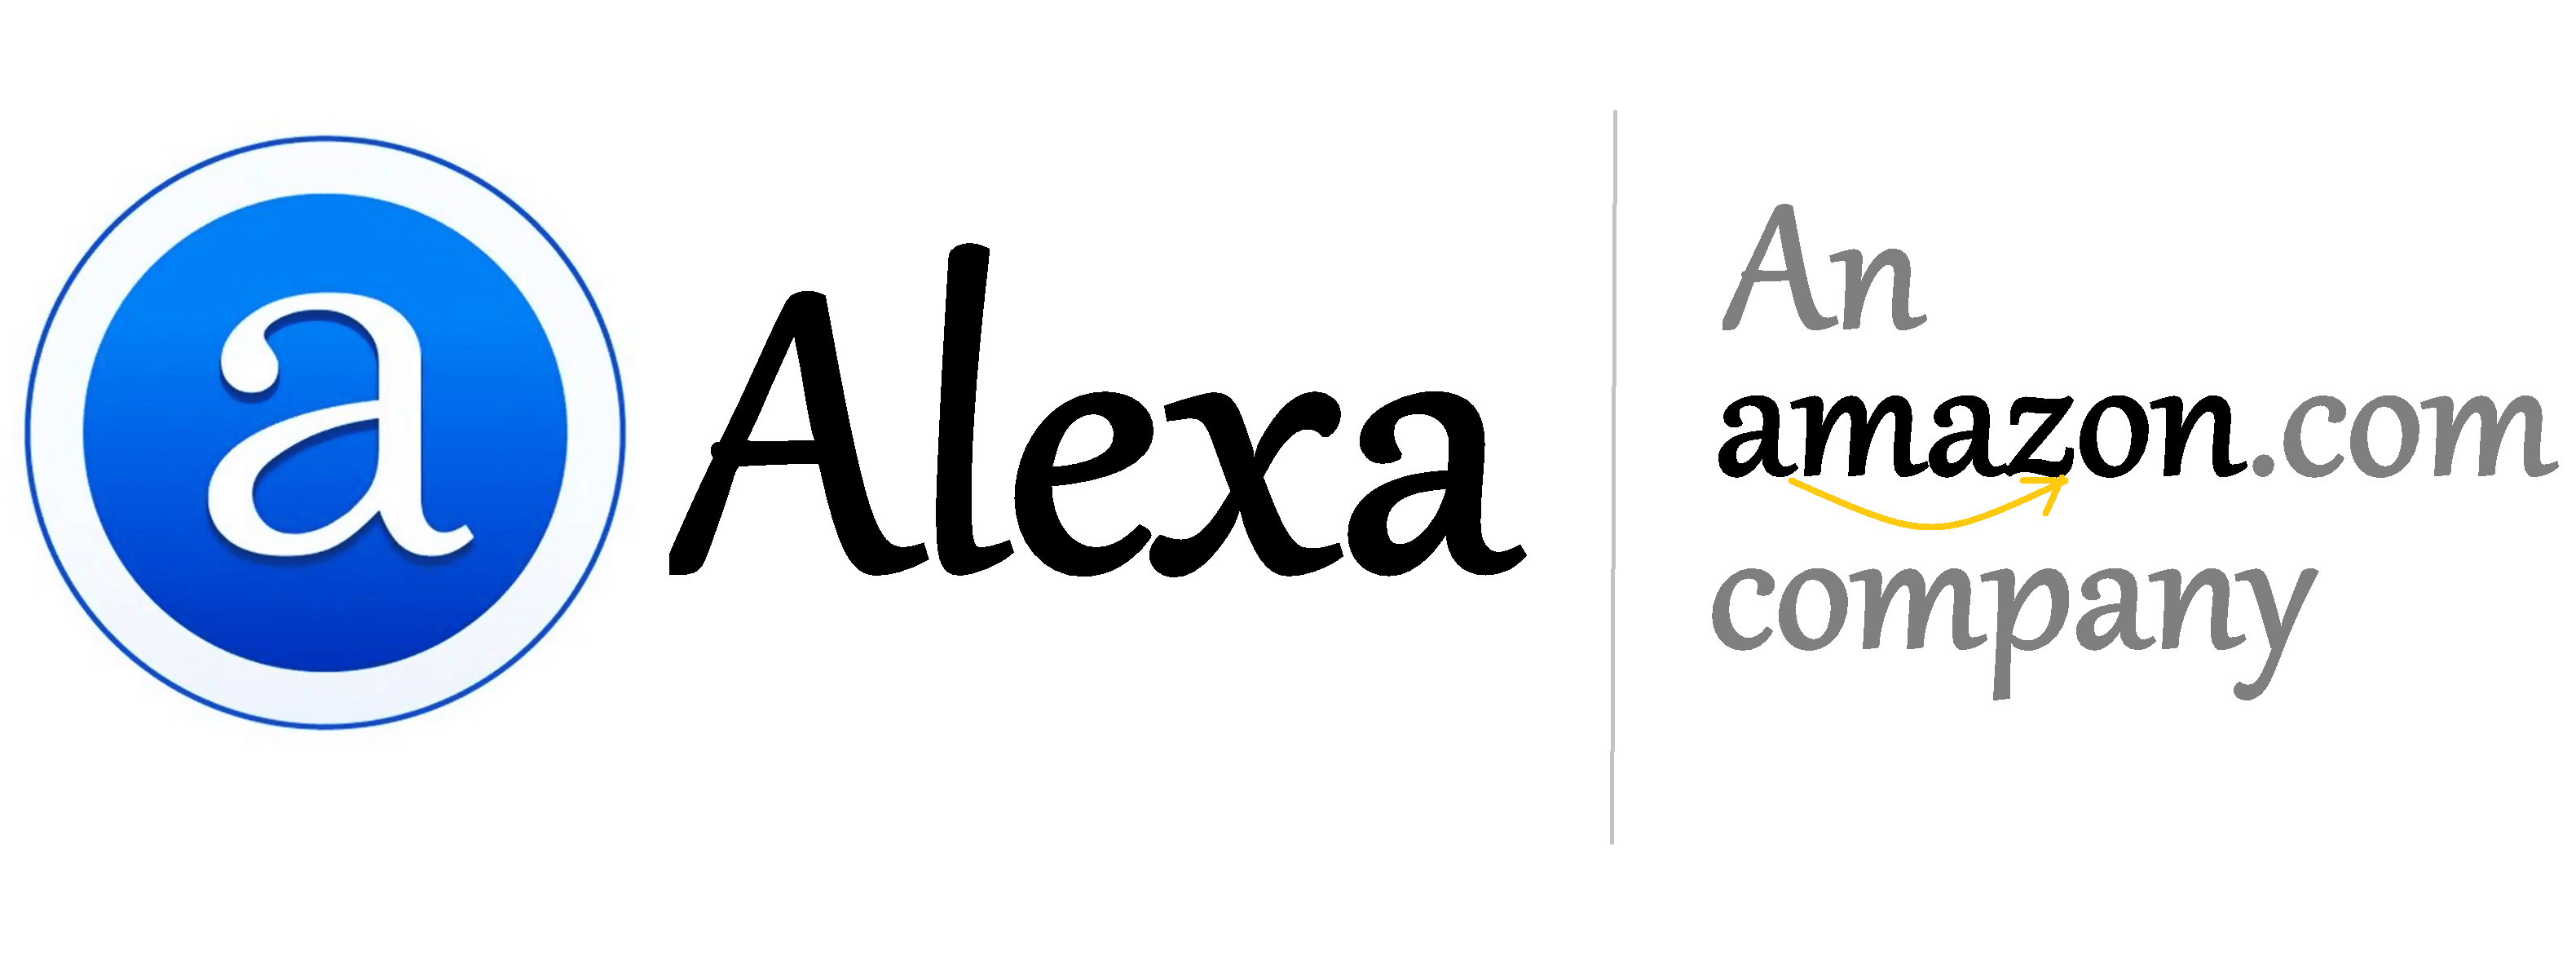 Alexa.com Logo - How To Improve Alexa Rank To Attract Advertisers - Ad Nets Review